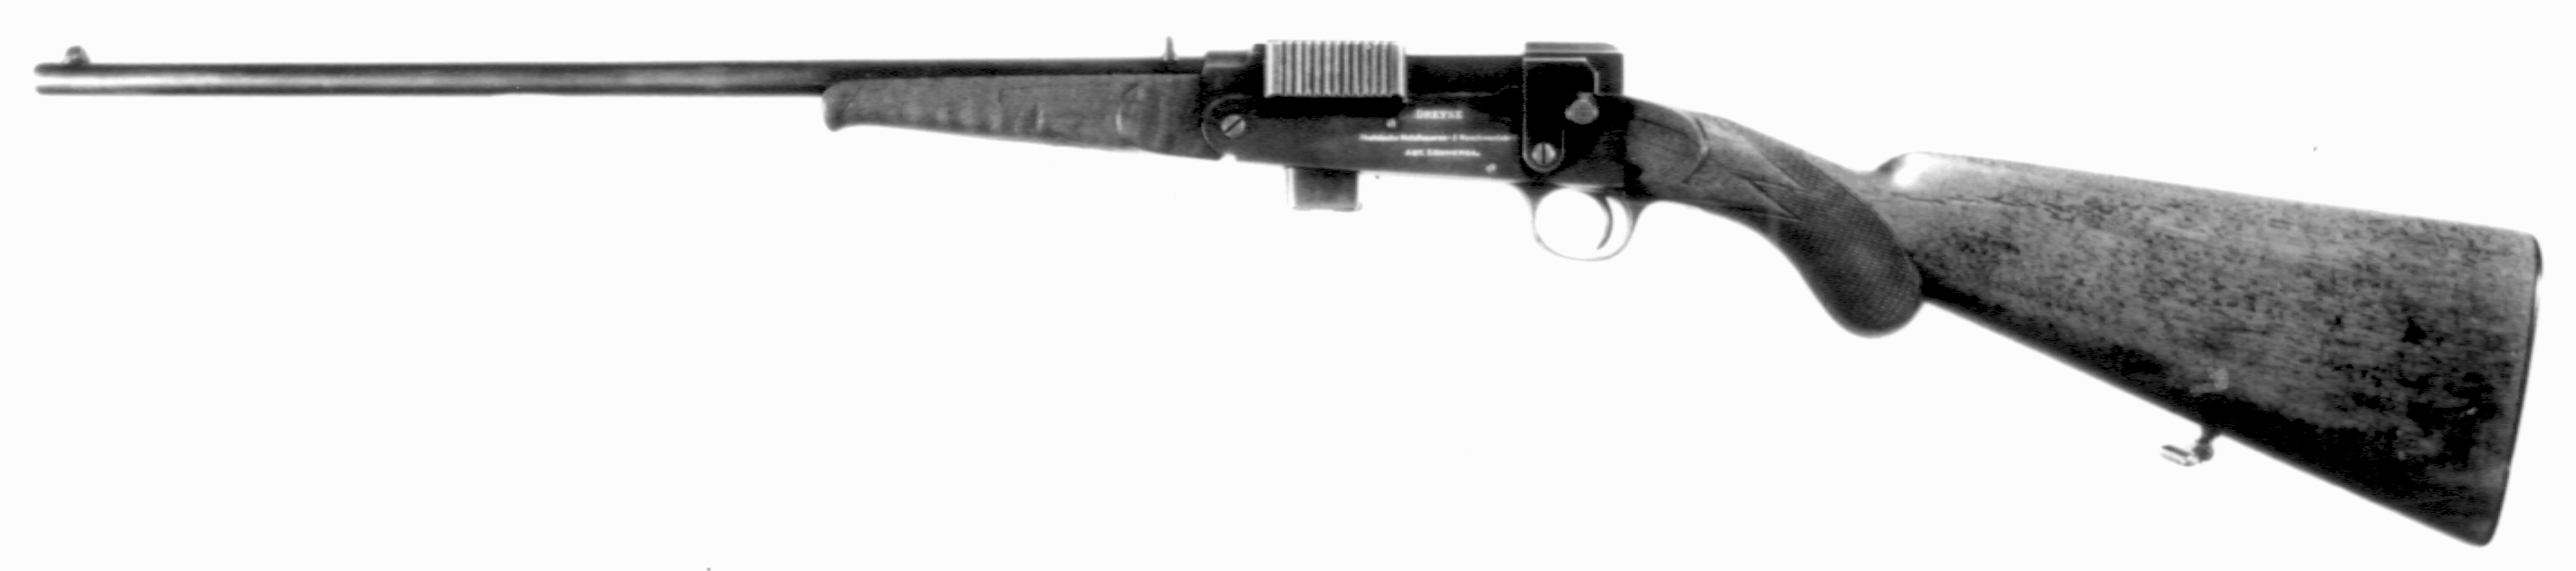 Dreyse Light Rifle or Carbine